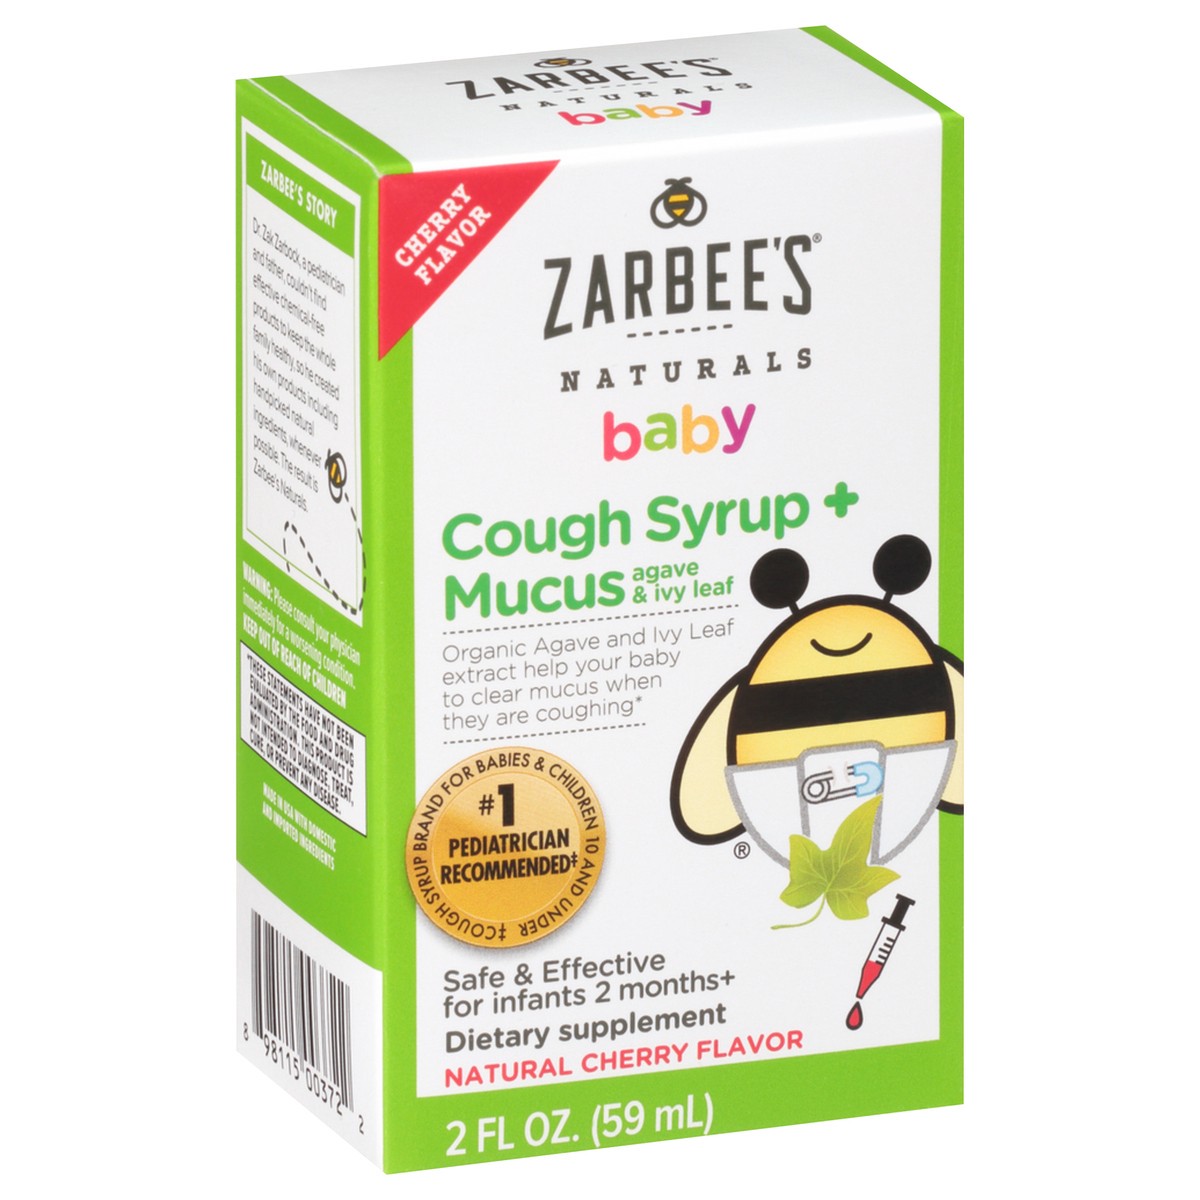 slide 2 of 9, Zarbee's Naturals Naturals Baby Natural Cherry Flavor Cough Syrup + Mucus 2 fl oz Box, 2 fl oz